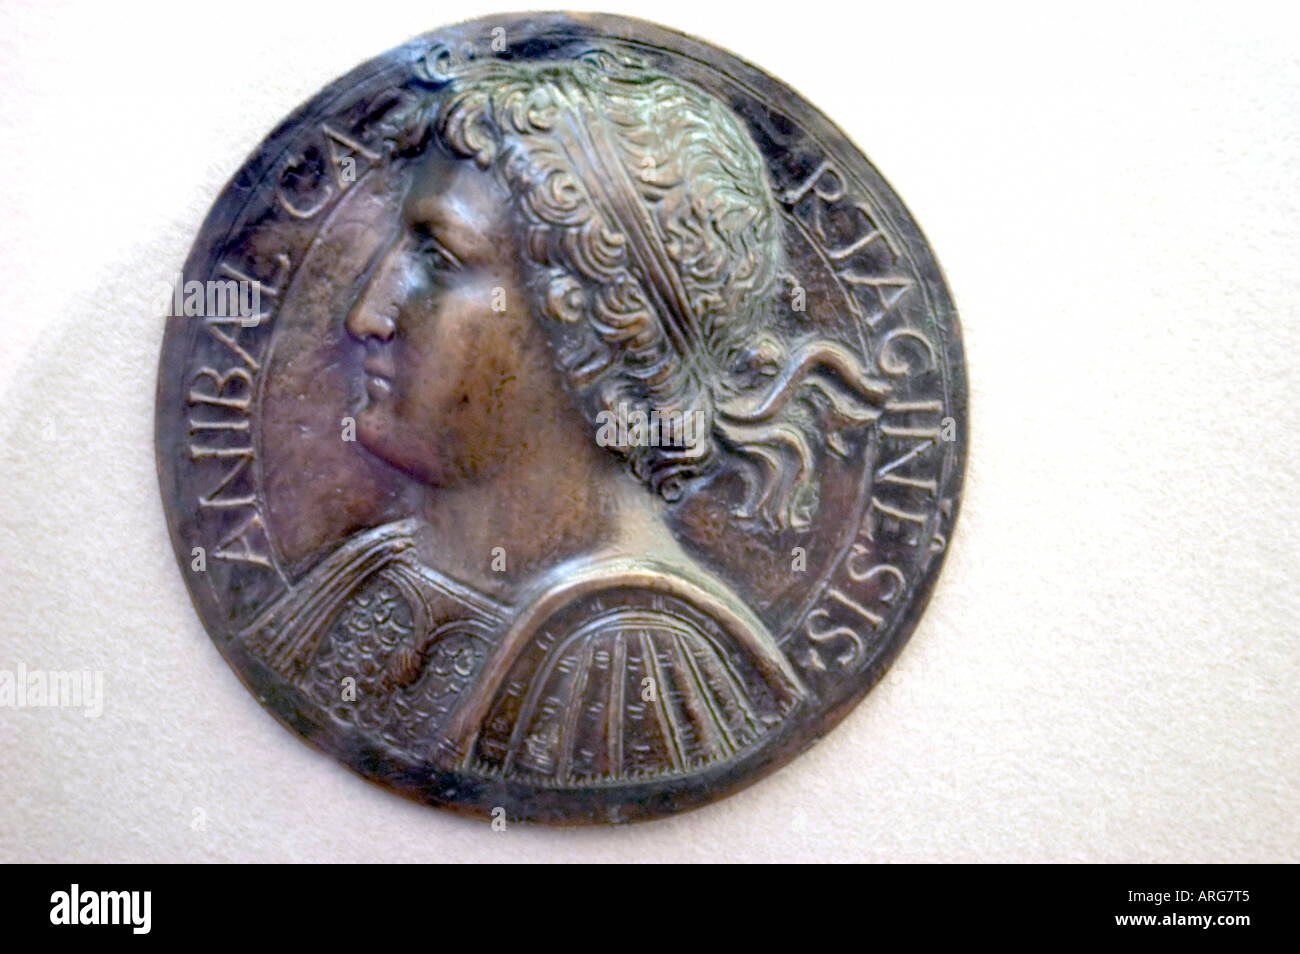 Detail, Roman Art, Paris France, Bronze Medallion, Artifact Coin in 'Louvre Museum' Showing Portrait of Hannibal, in Profile Stock Photo